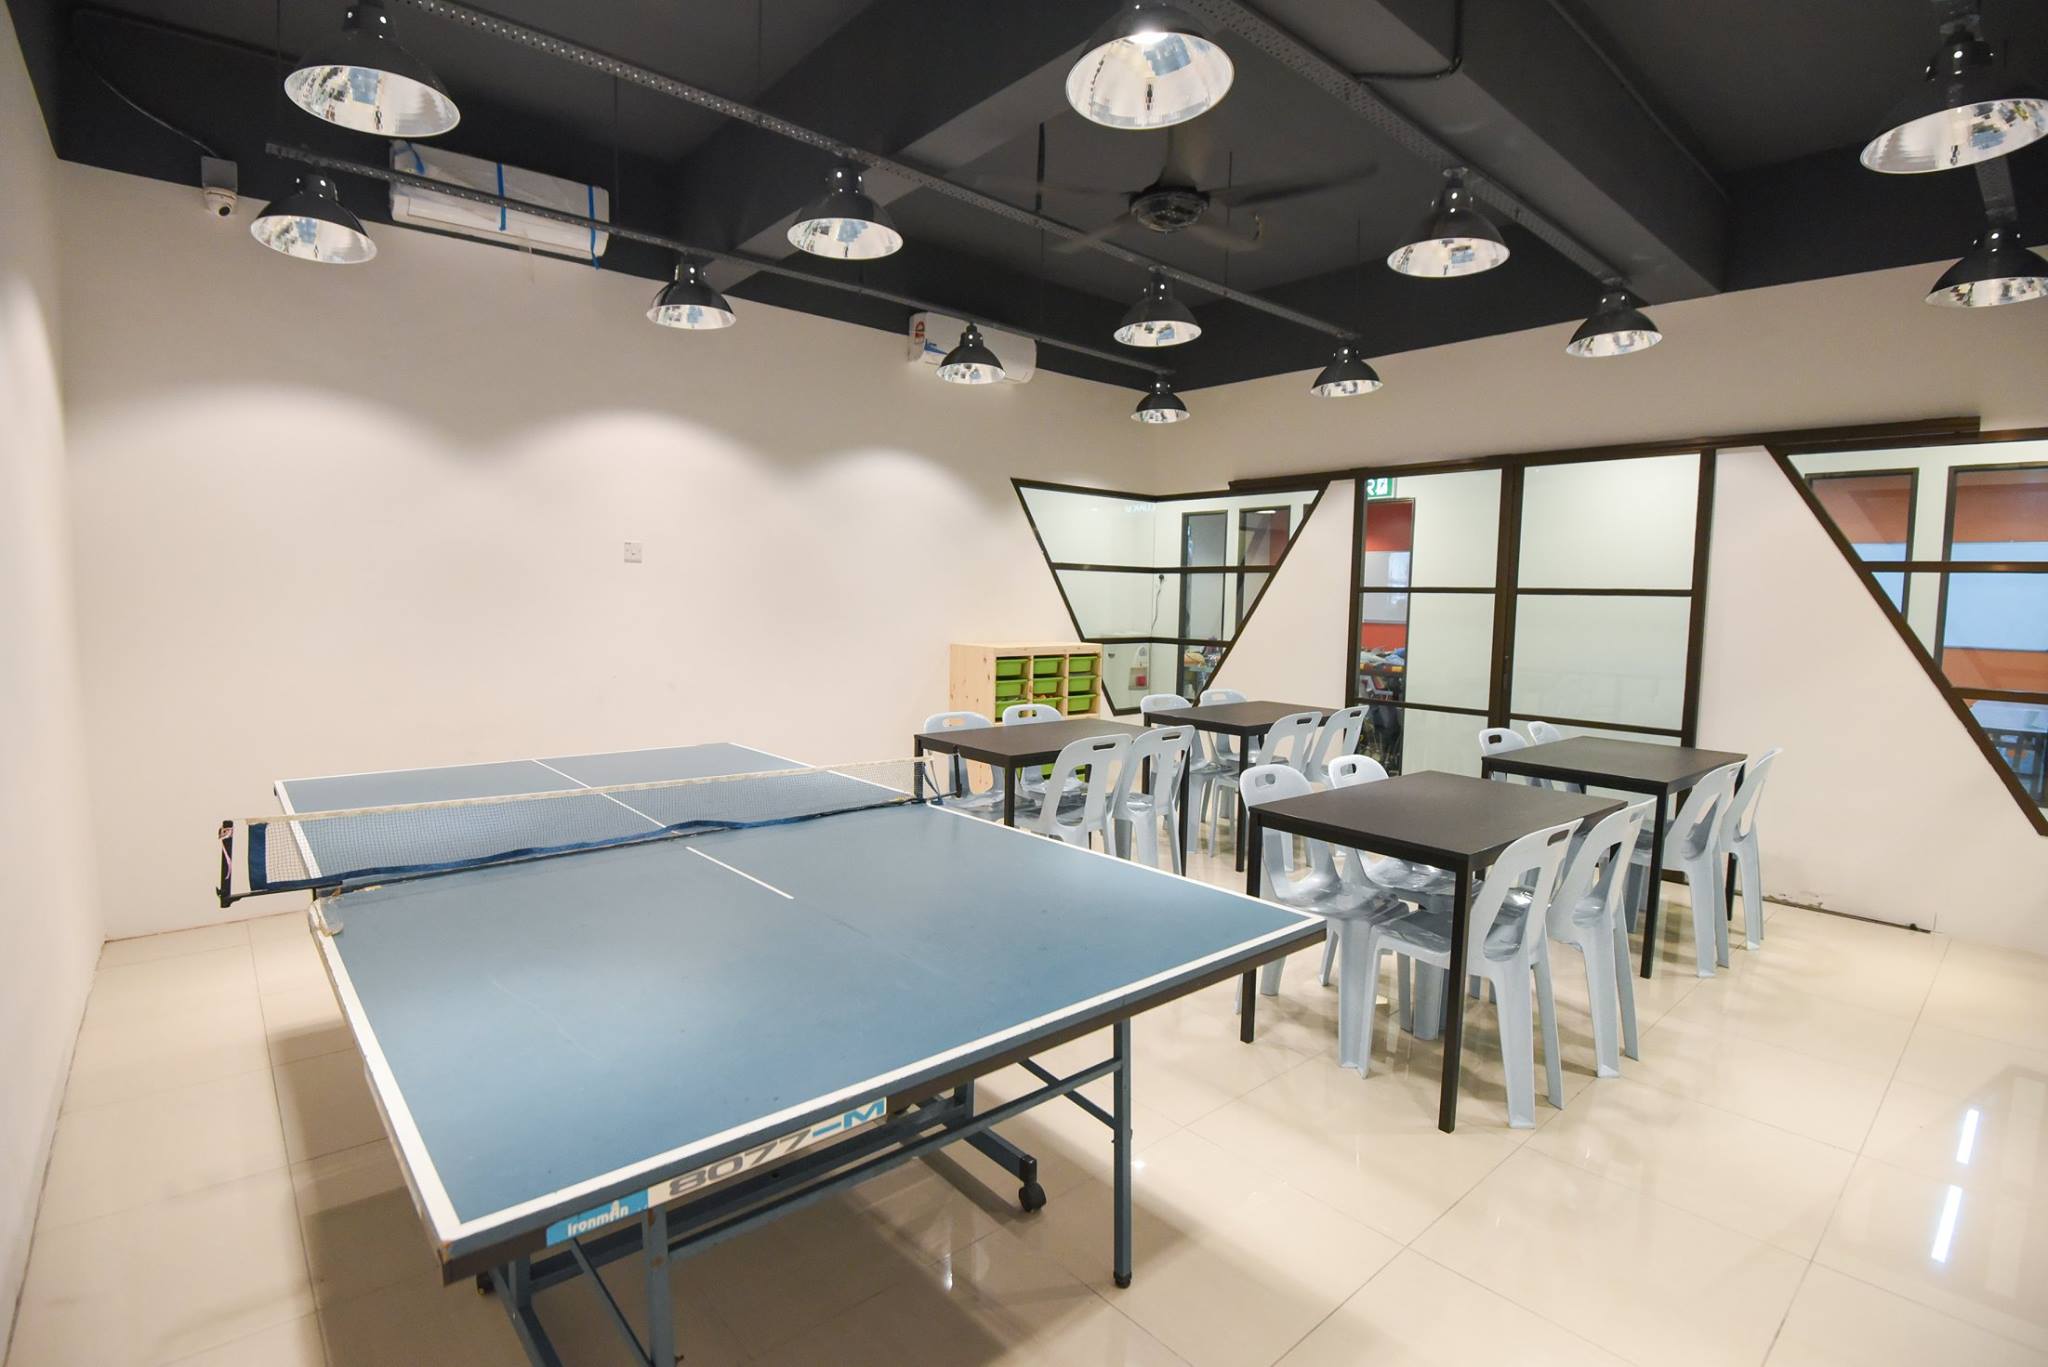 Tuition Centre @ Bandar Mahkota Cheras (Business Asset) | VentureGrab ...